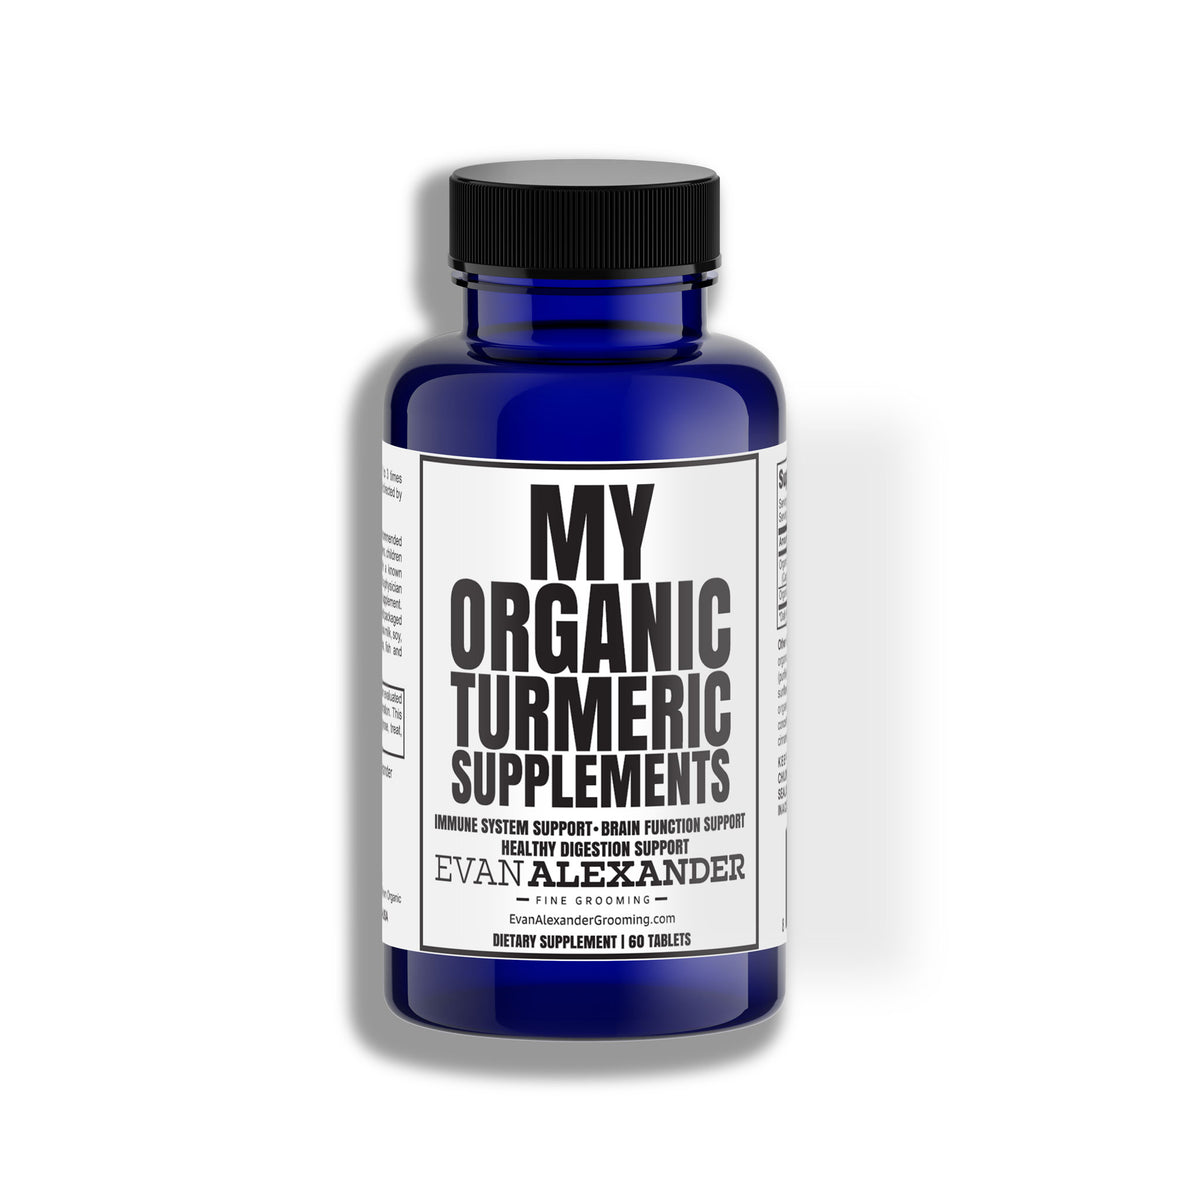 MY Organic Turmeric Supplements